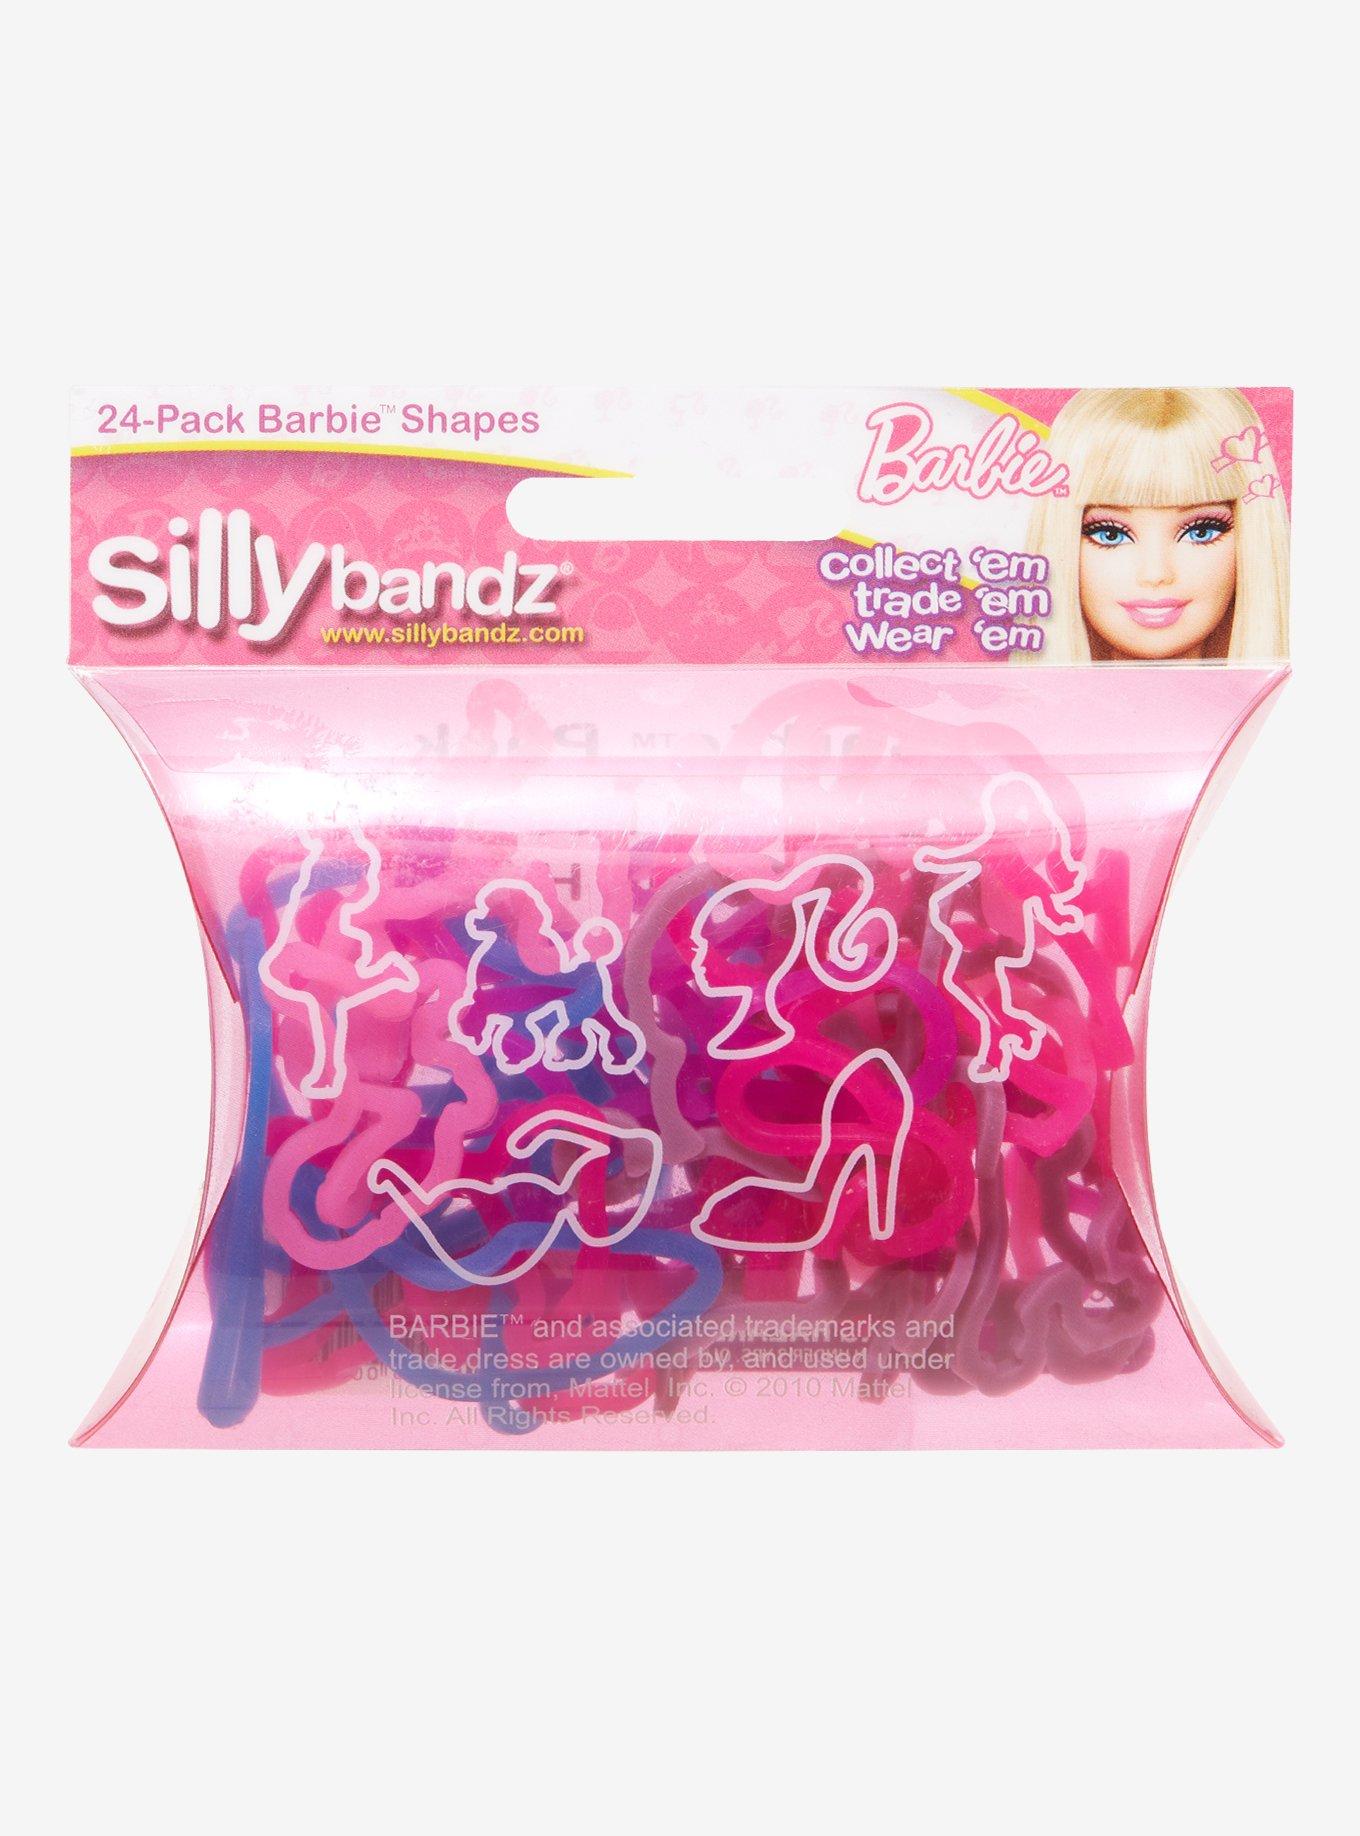 Justin Bieber Sillybandz - Buy Official Sillybandz Online Now